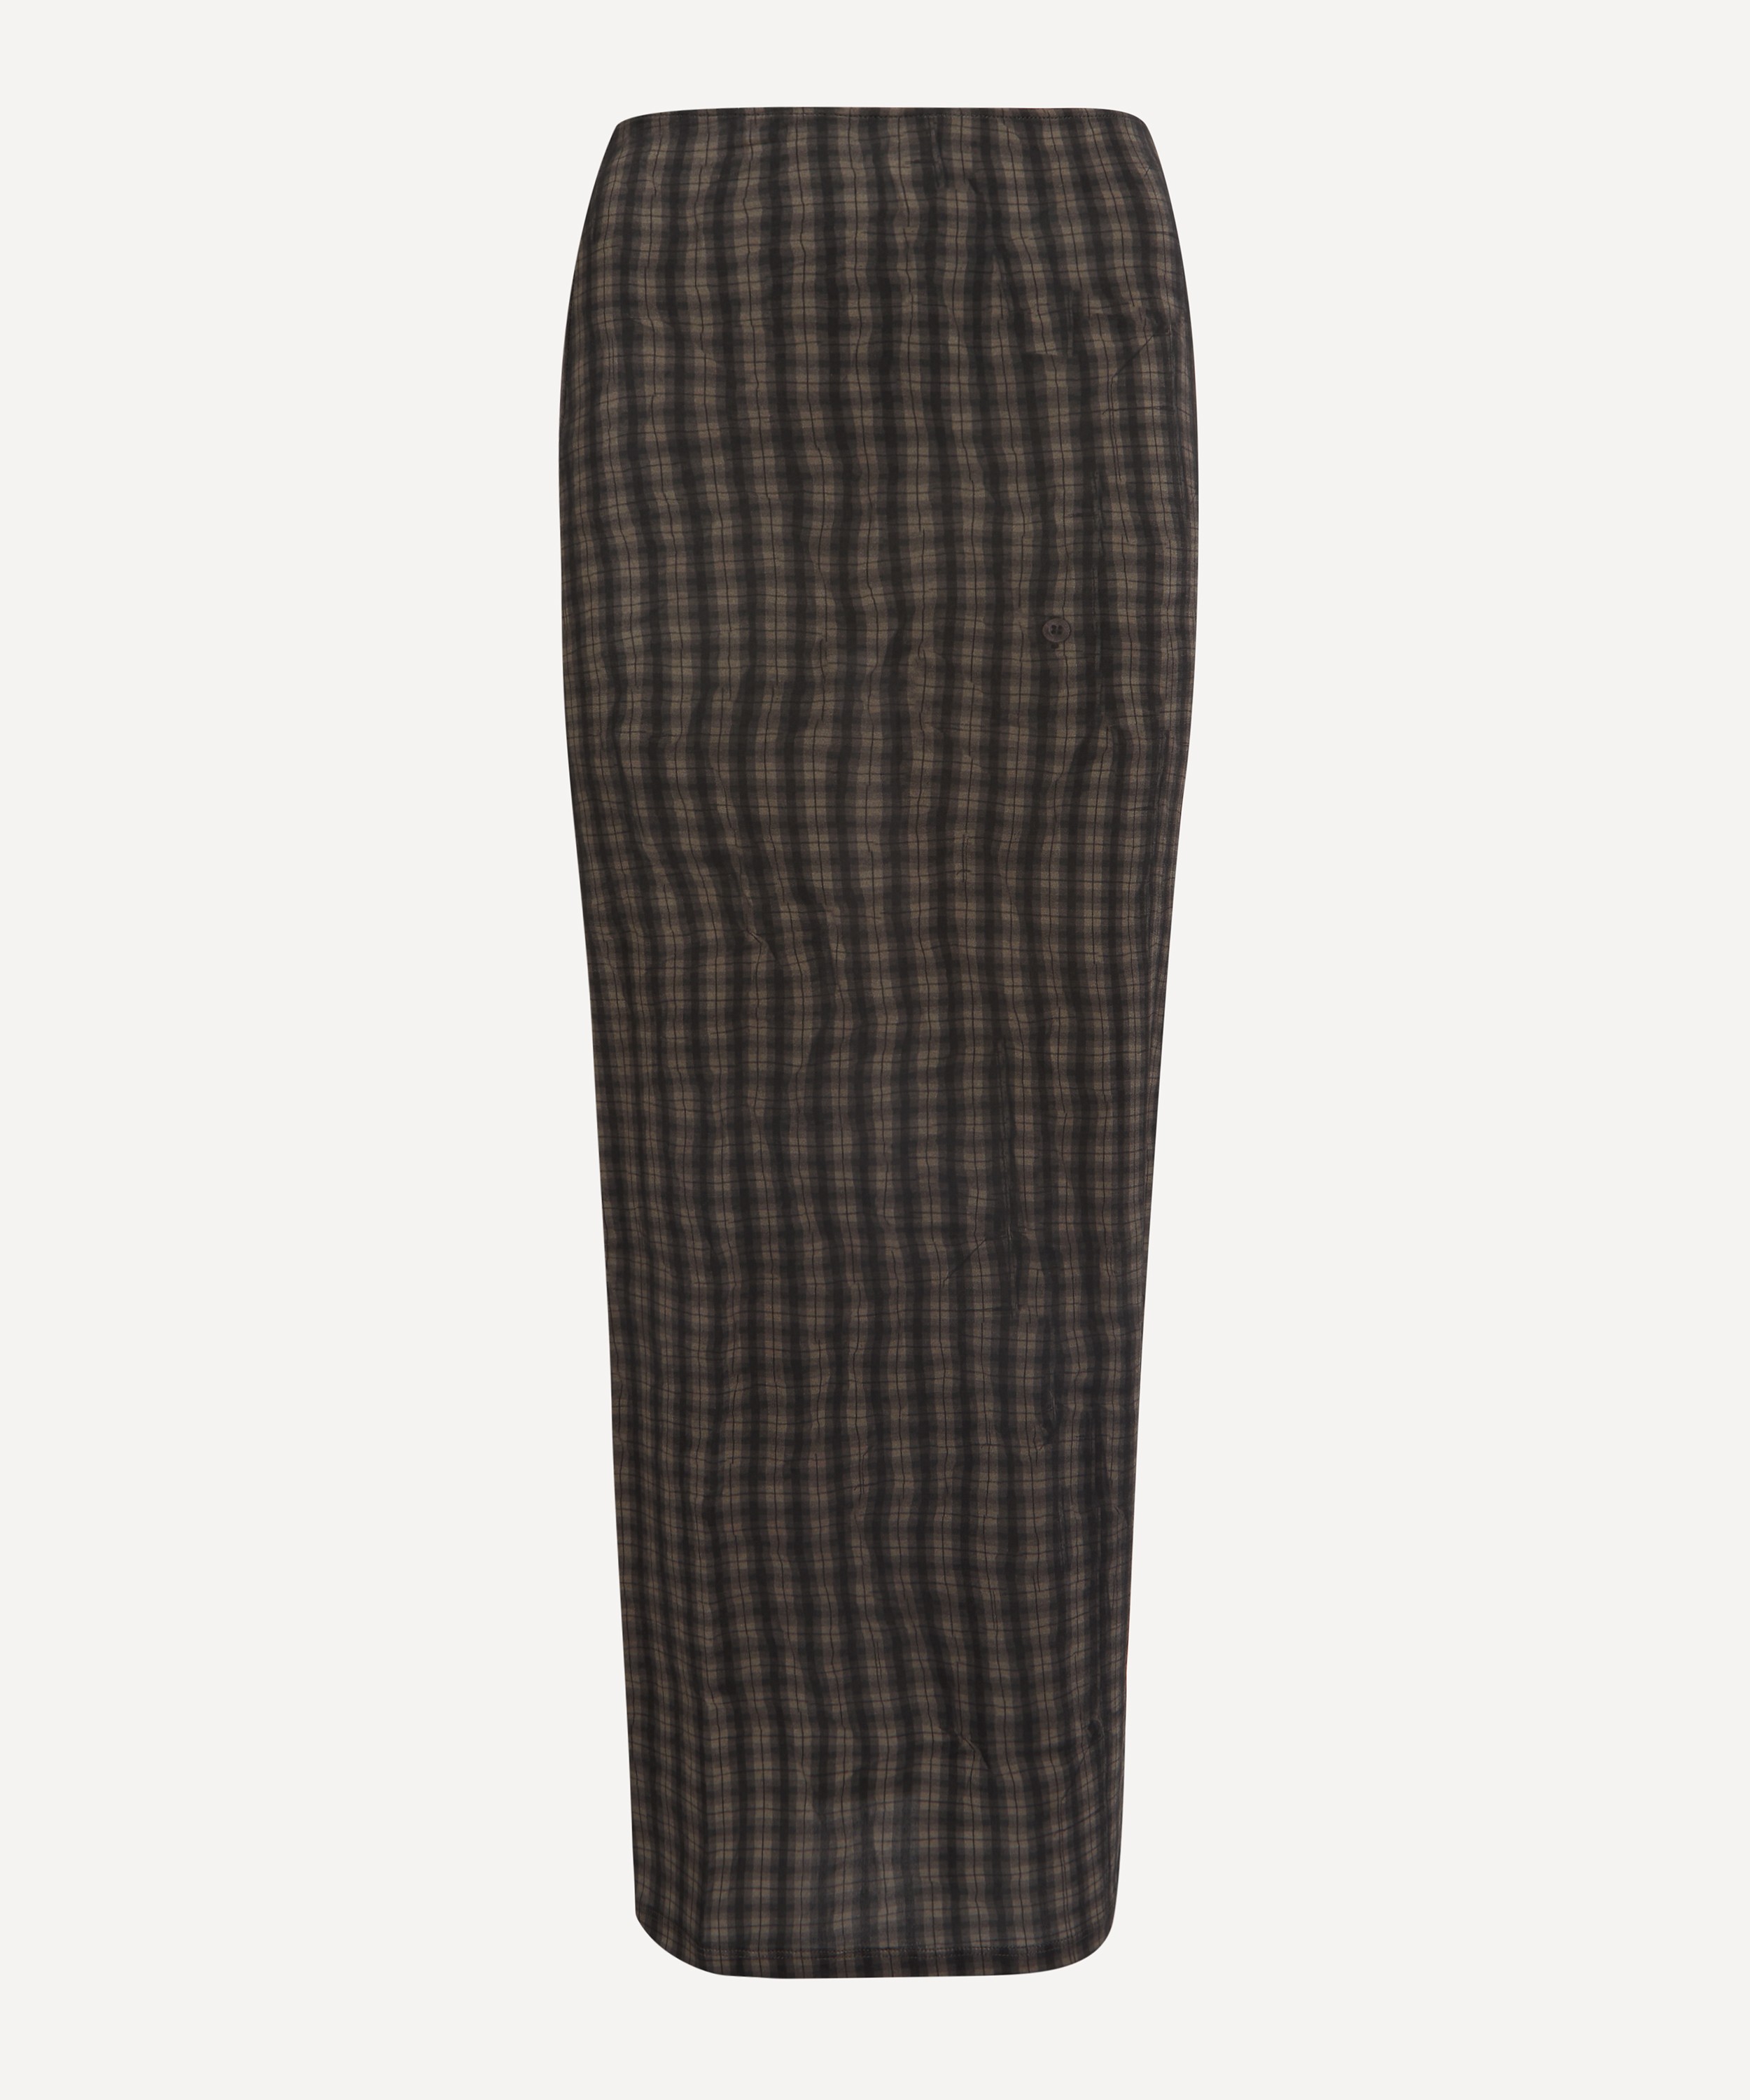 Paloma Wool - Raff Chequered Tube Skirt  image number 0